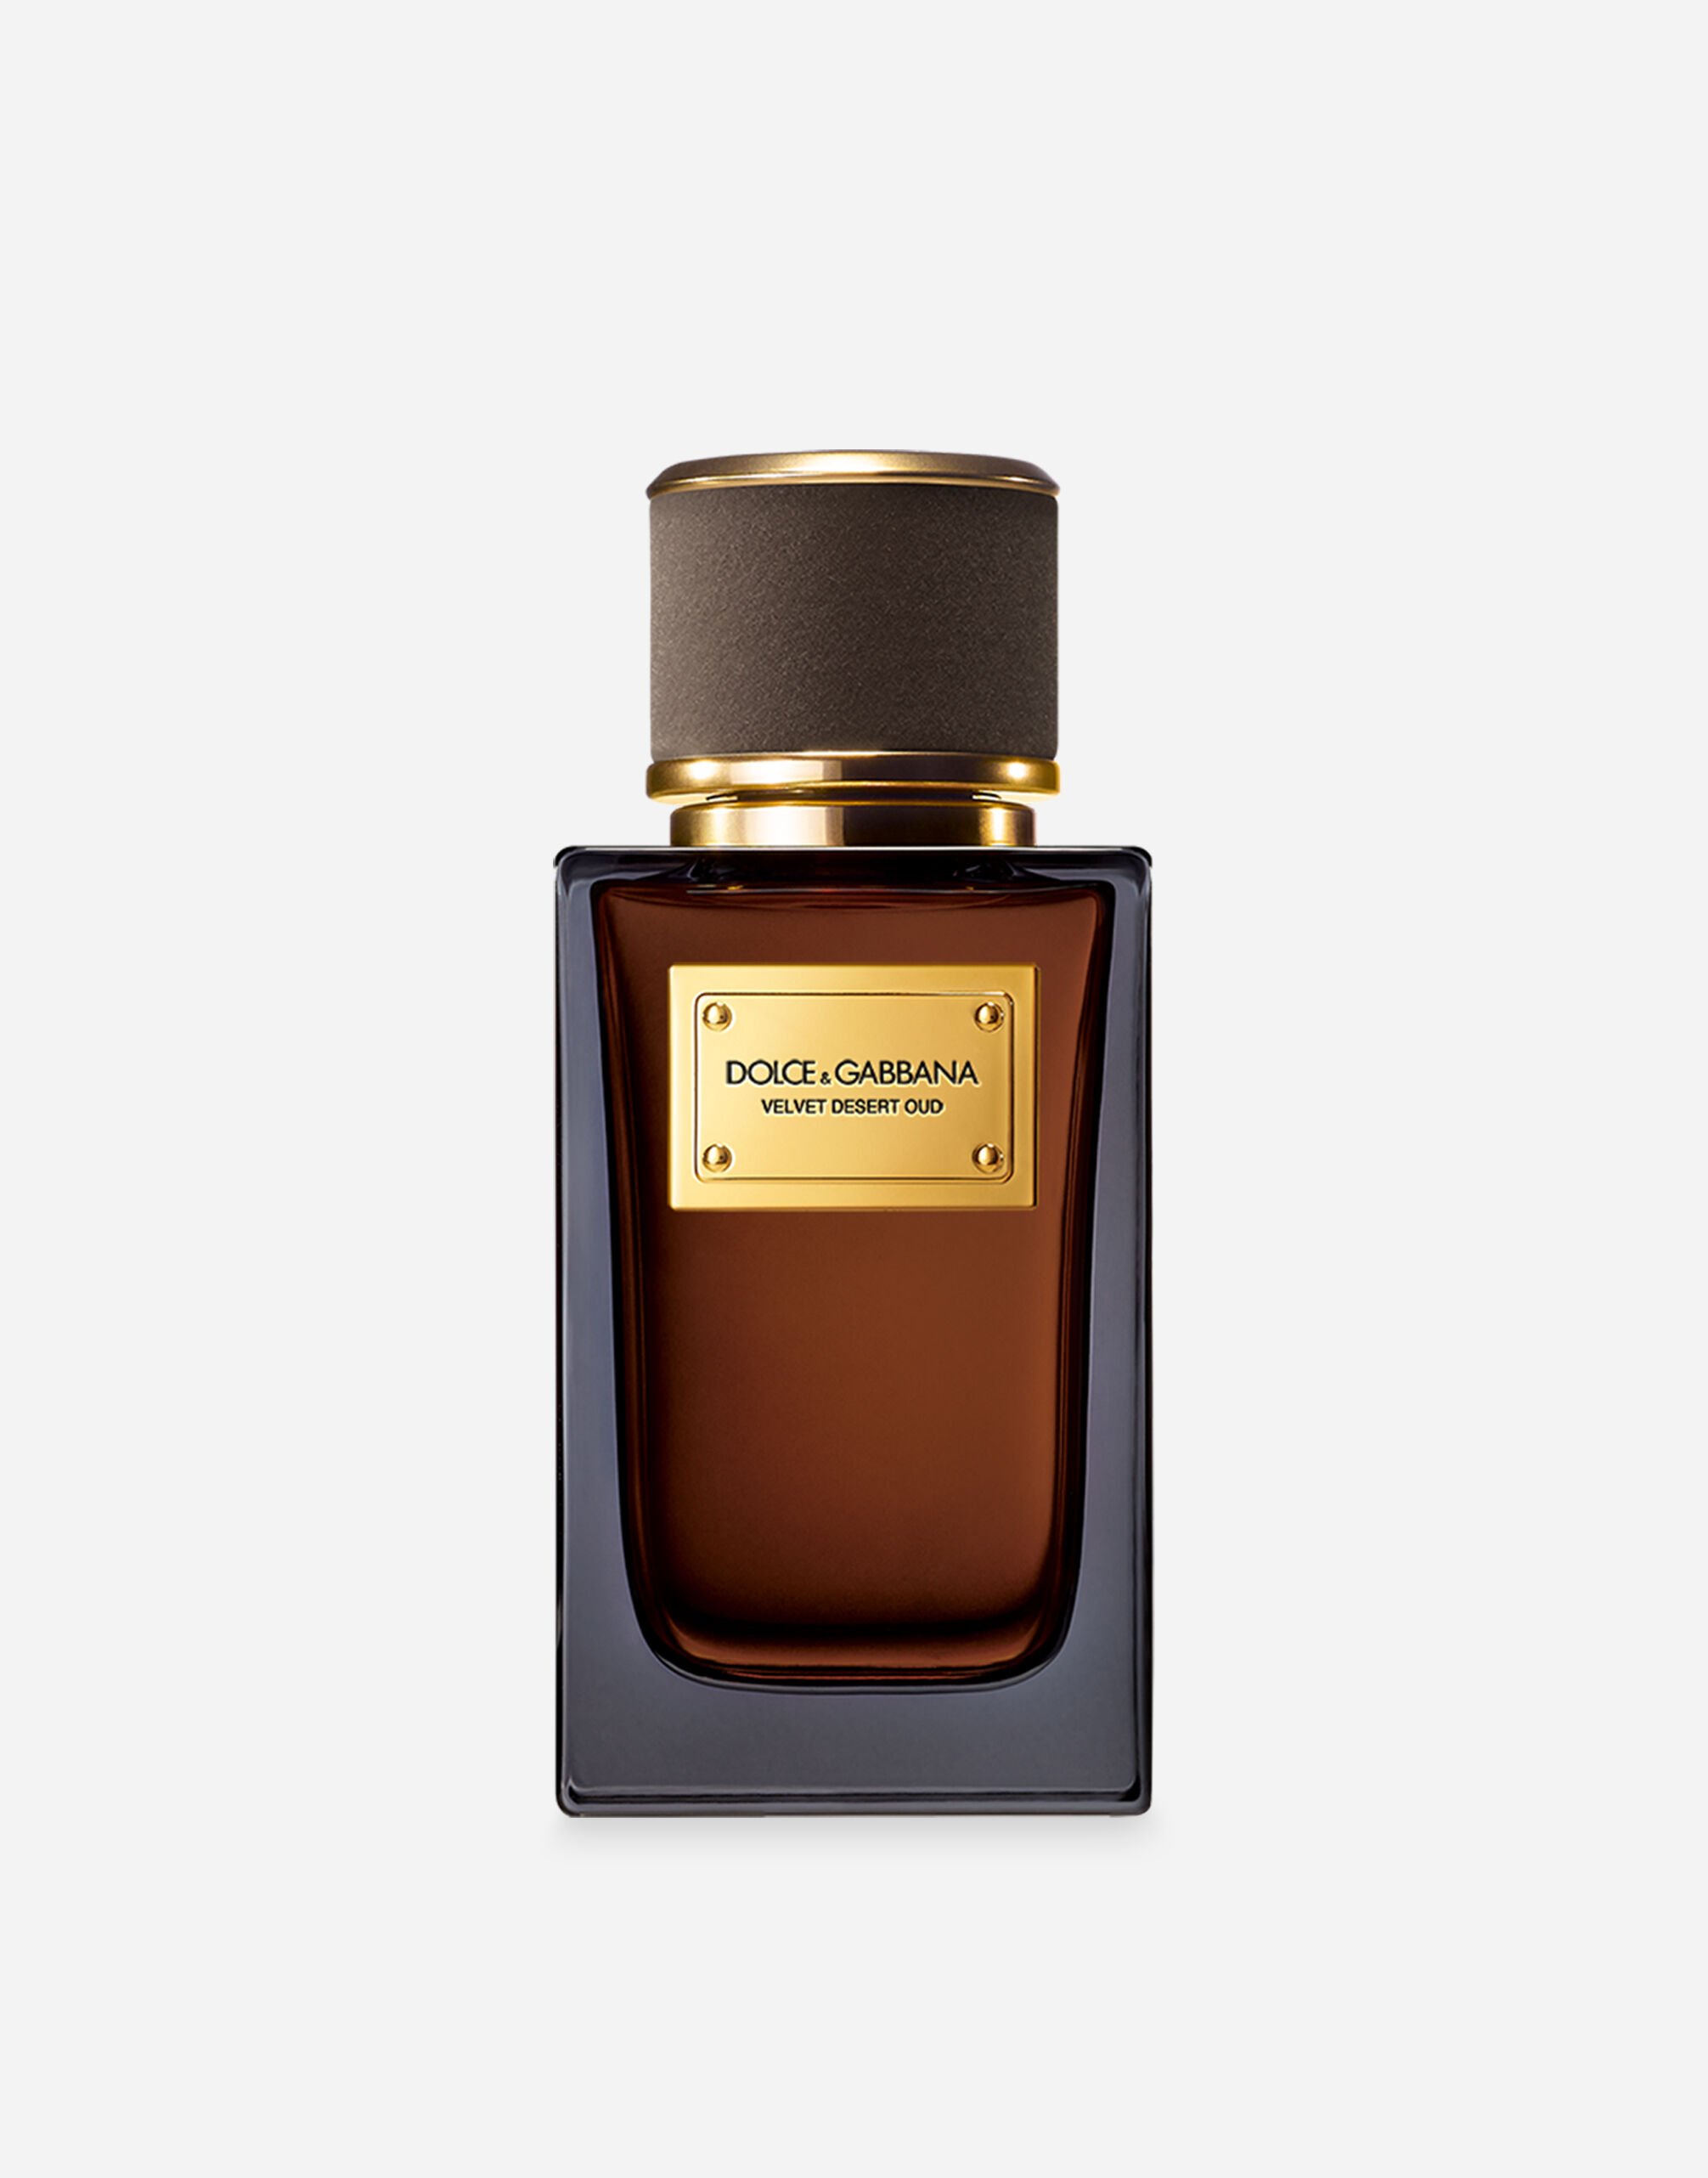 Dolce & Gabbana Velvet Desert Oud Eau de Parfum - VT0063VT000